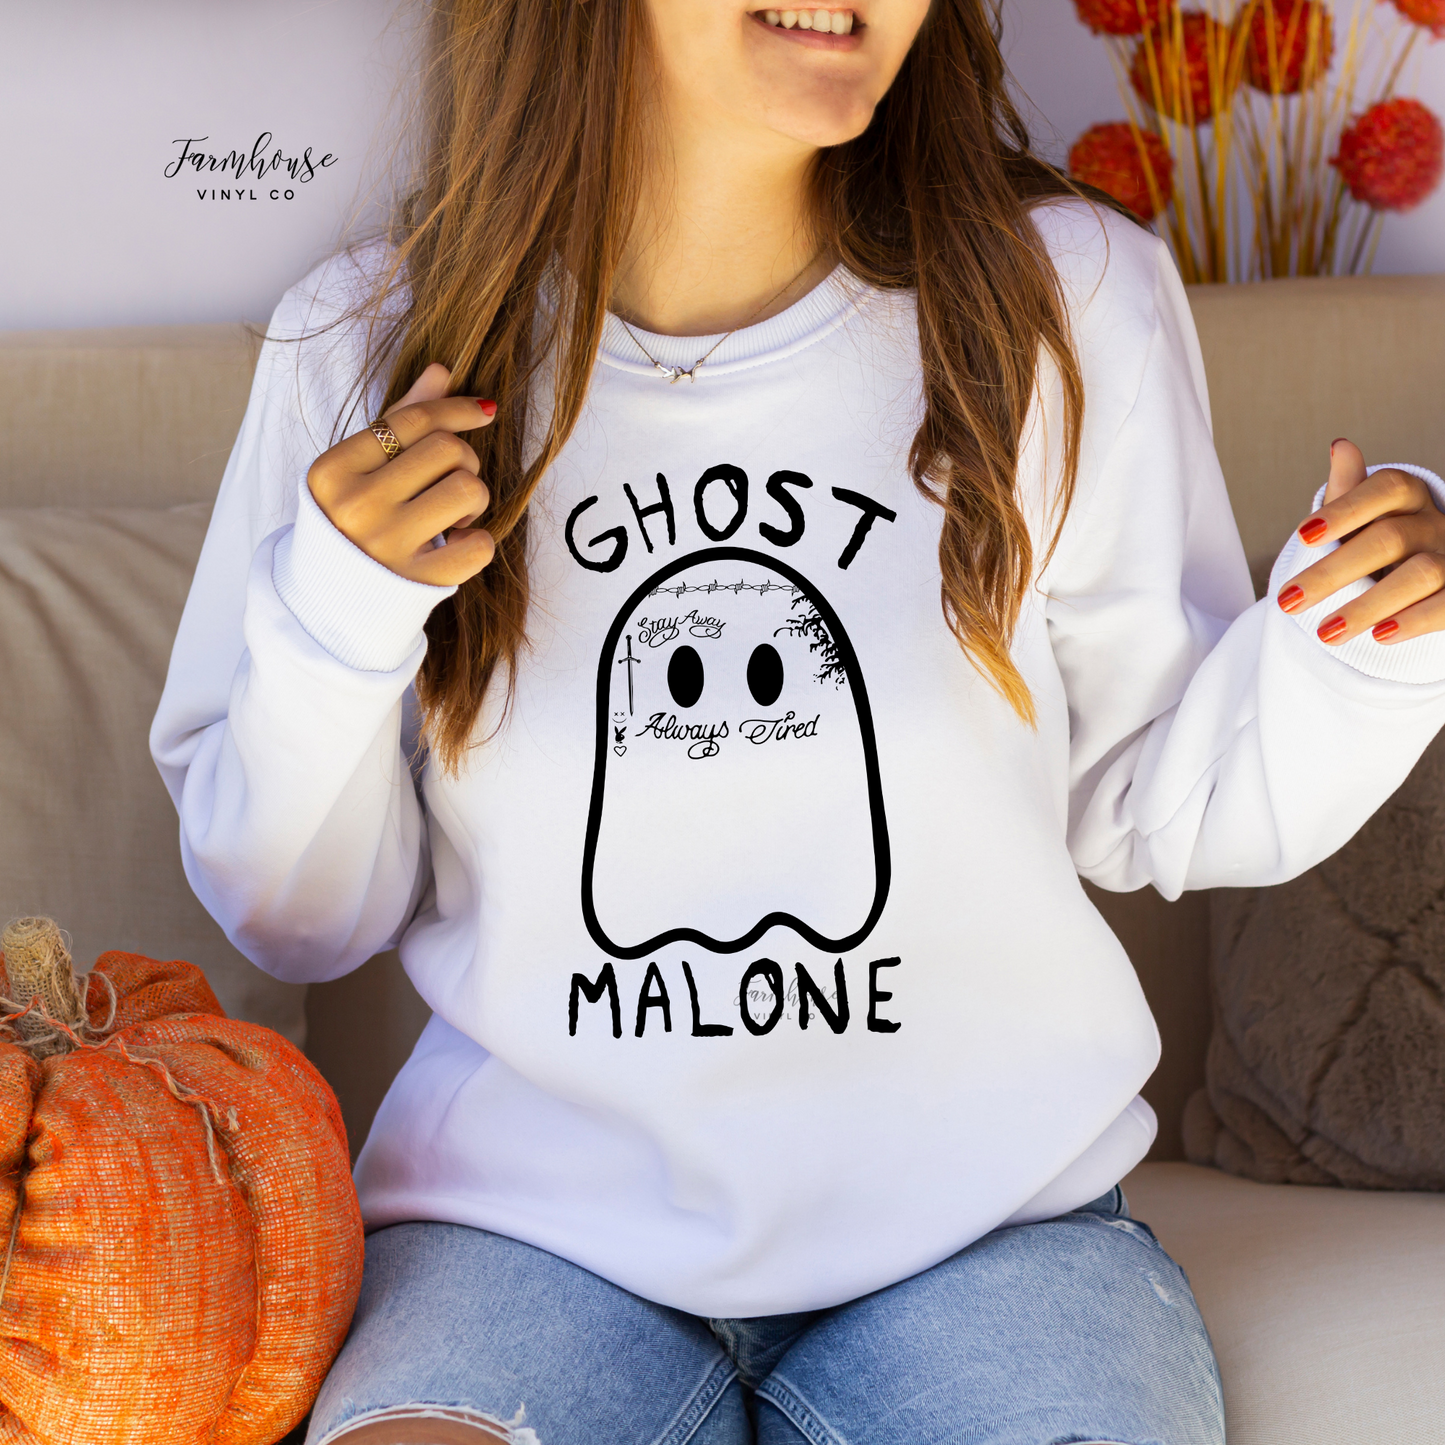 Ghost Malone Shirt - Farmhouse Vinyl Co